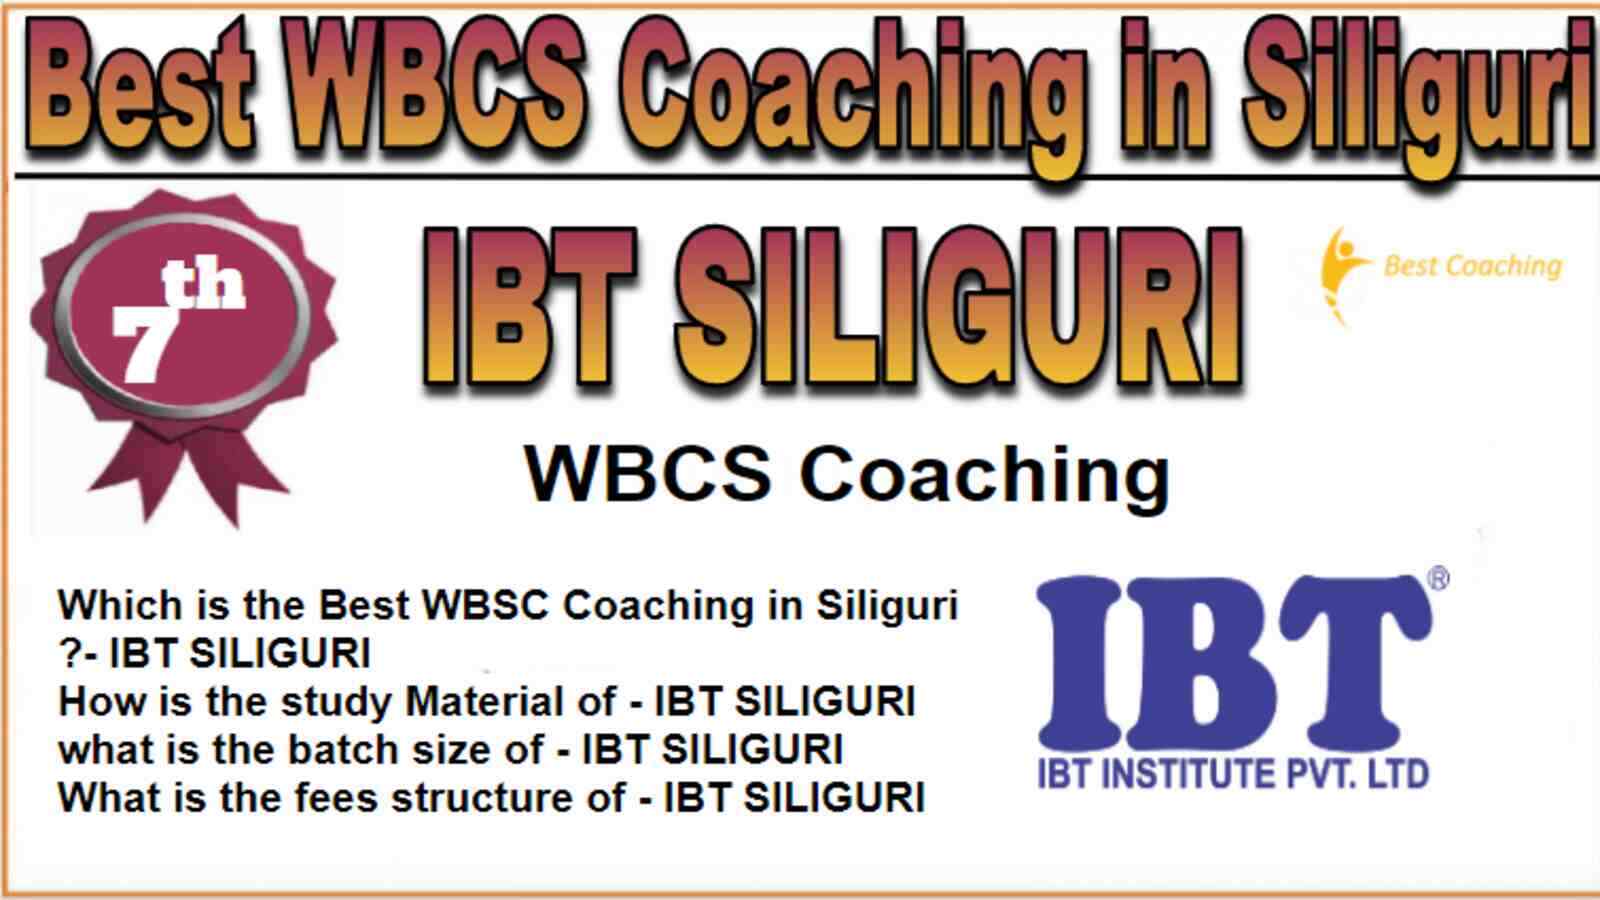 Rank 7 Best WBCS Coaching in Siliguri